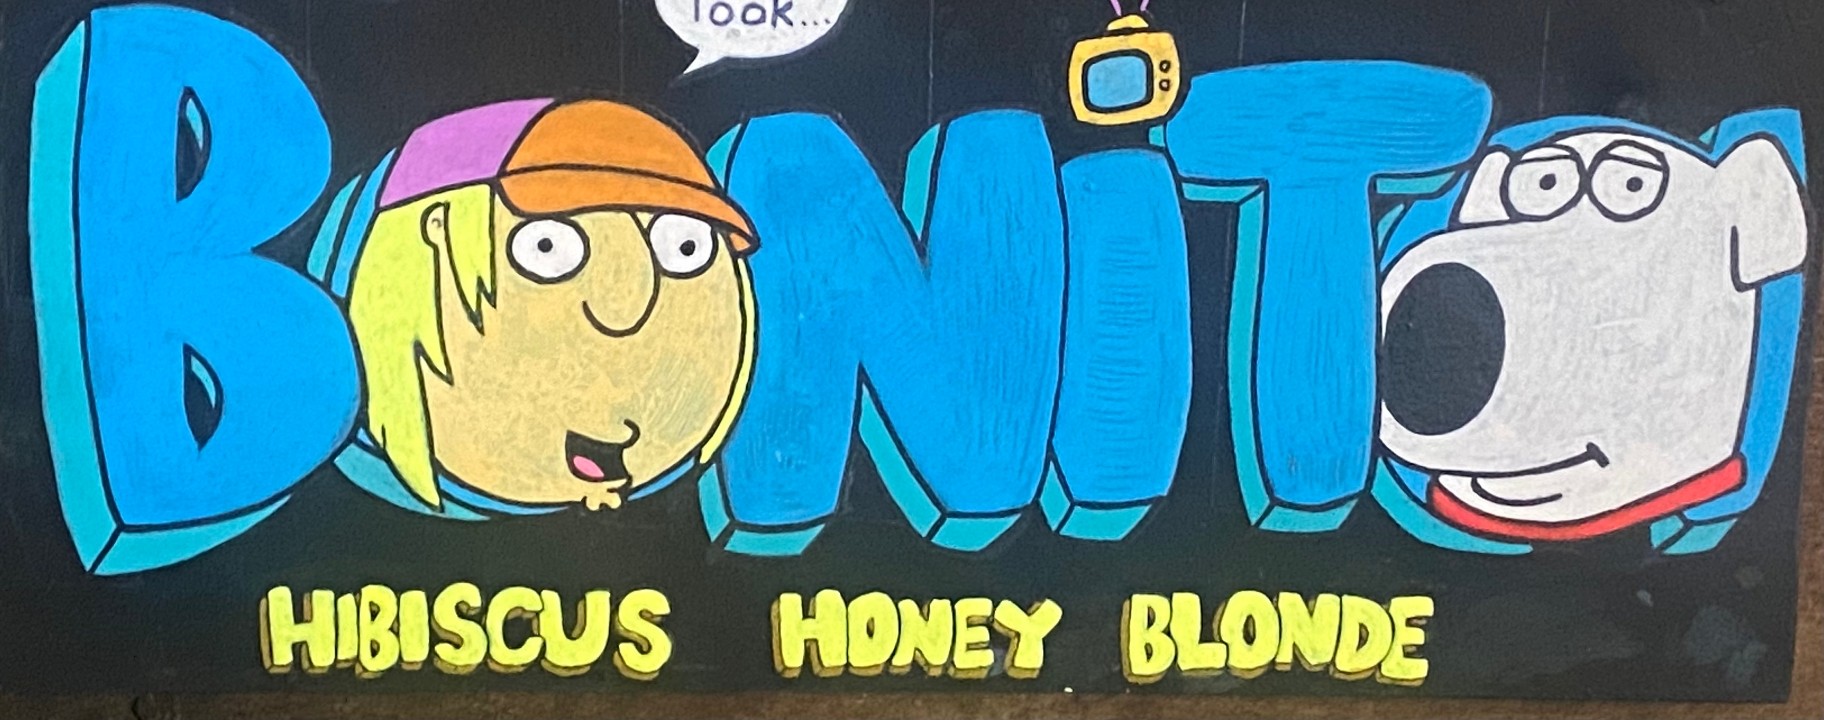 (3) Bonita Hibiscus Honey Blonde